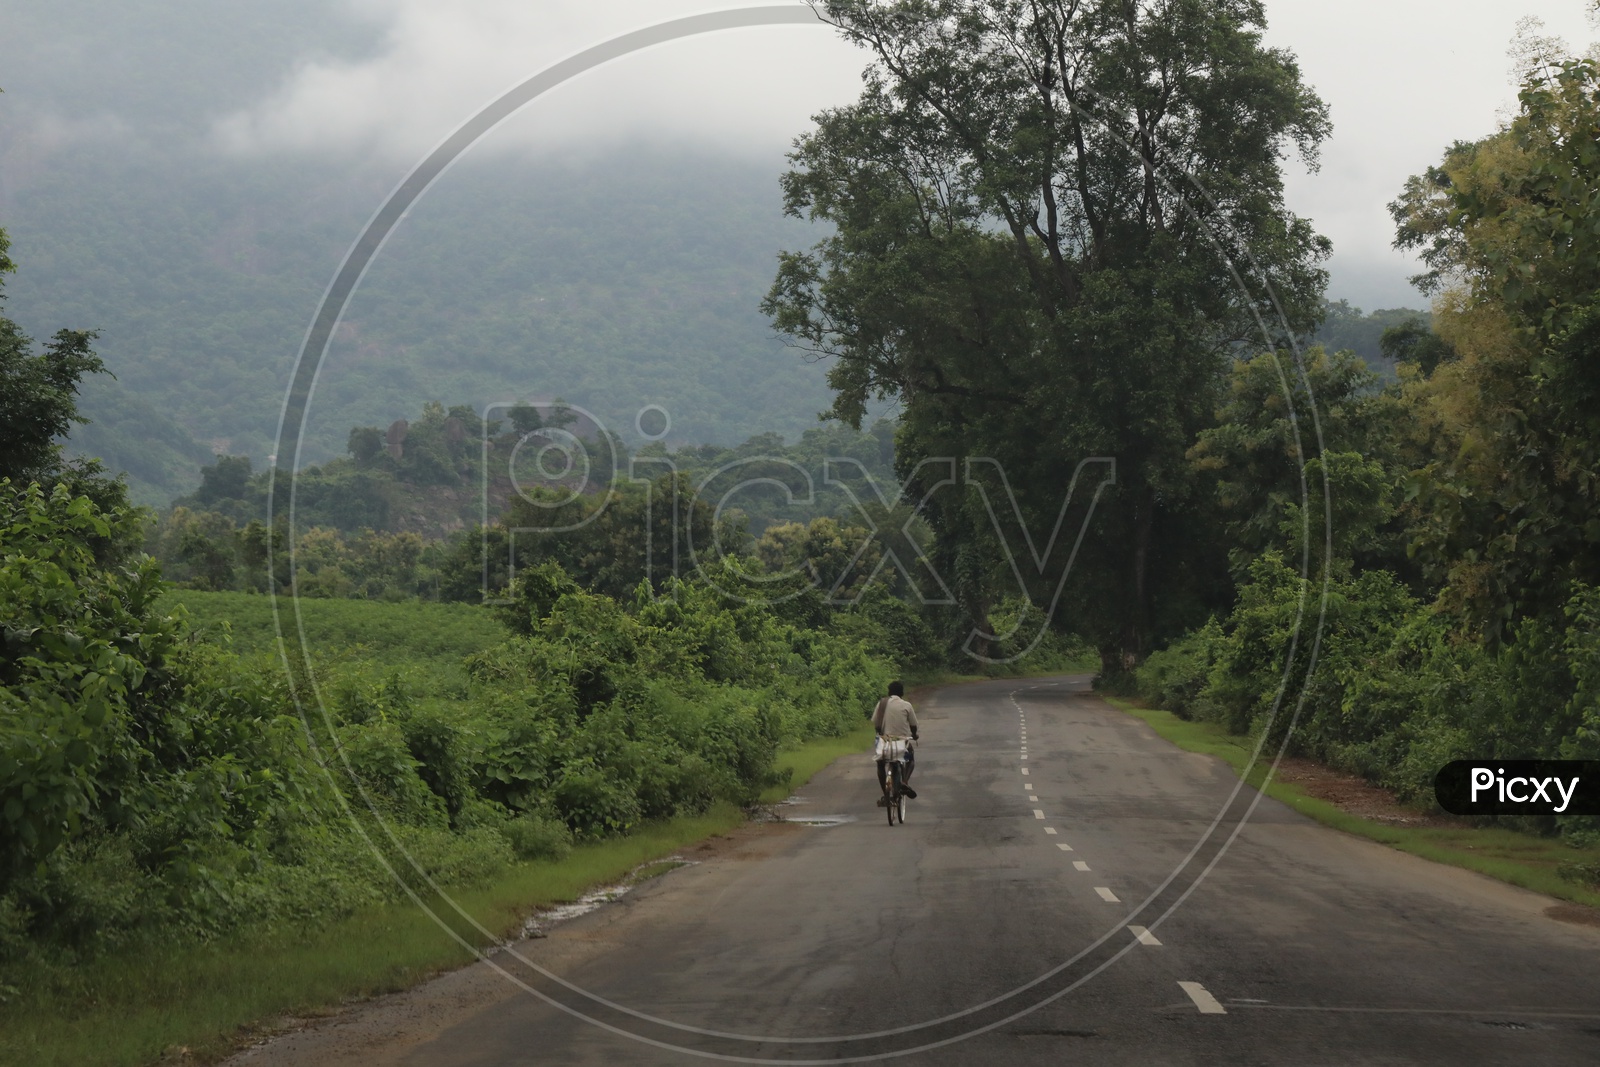 A Rural Indian Man Riding Bicycle on Rural Village Roads